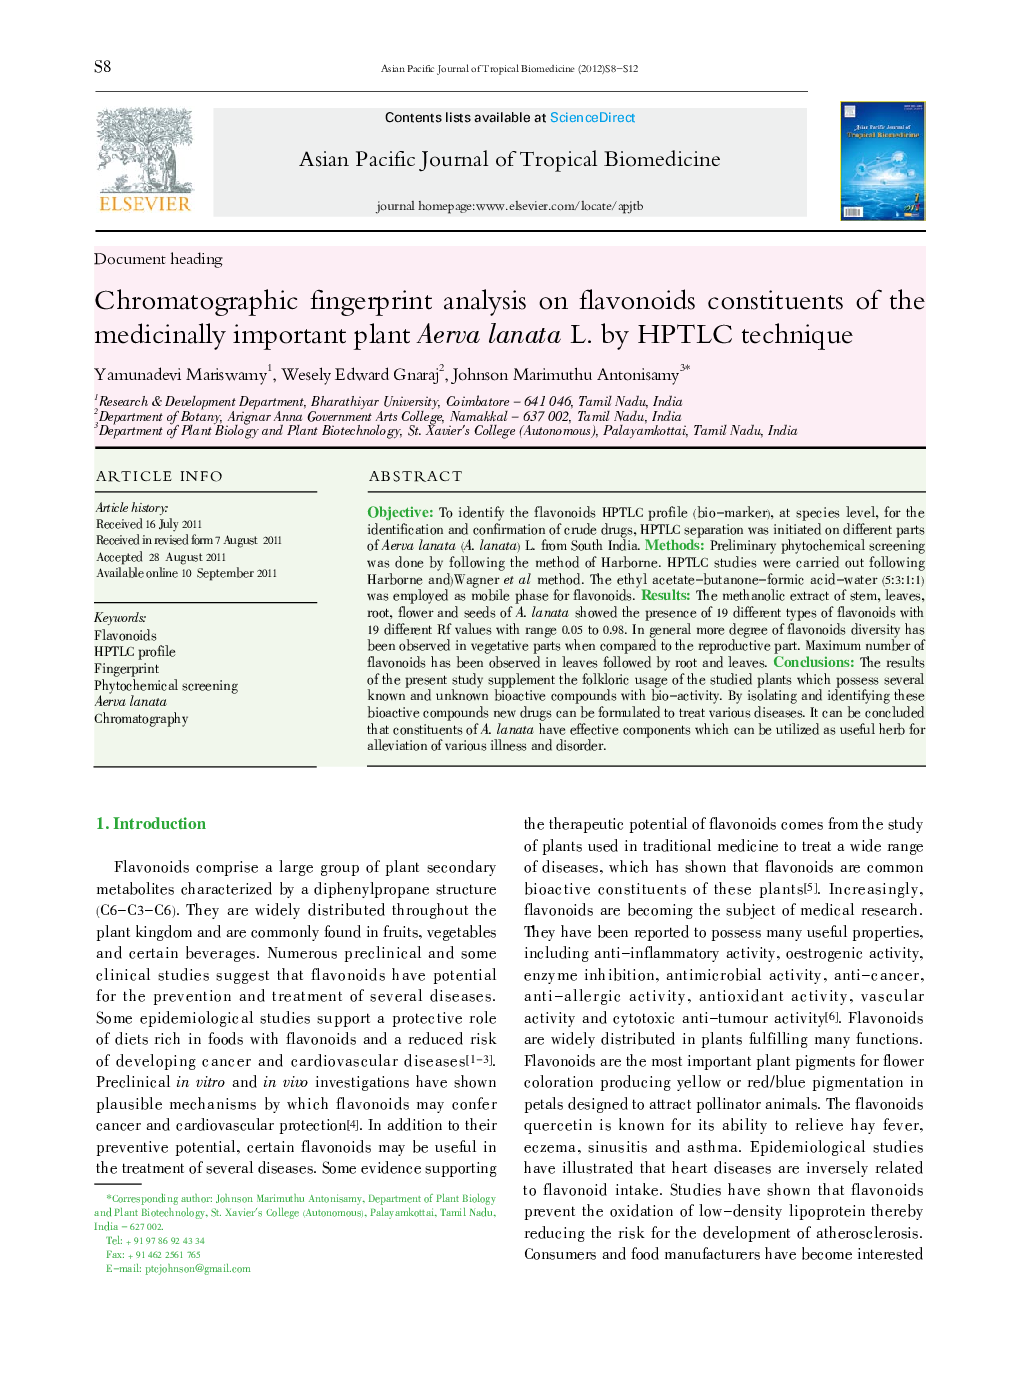 Chromatographic fingerprint analysis on flavonoids constituents of the medicinally important plant Aerva lanata L. by HPTLC technique